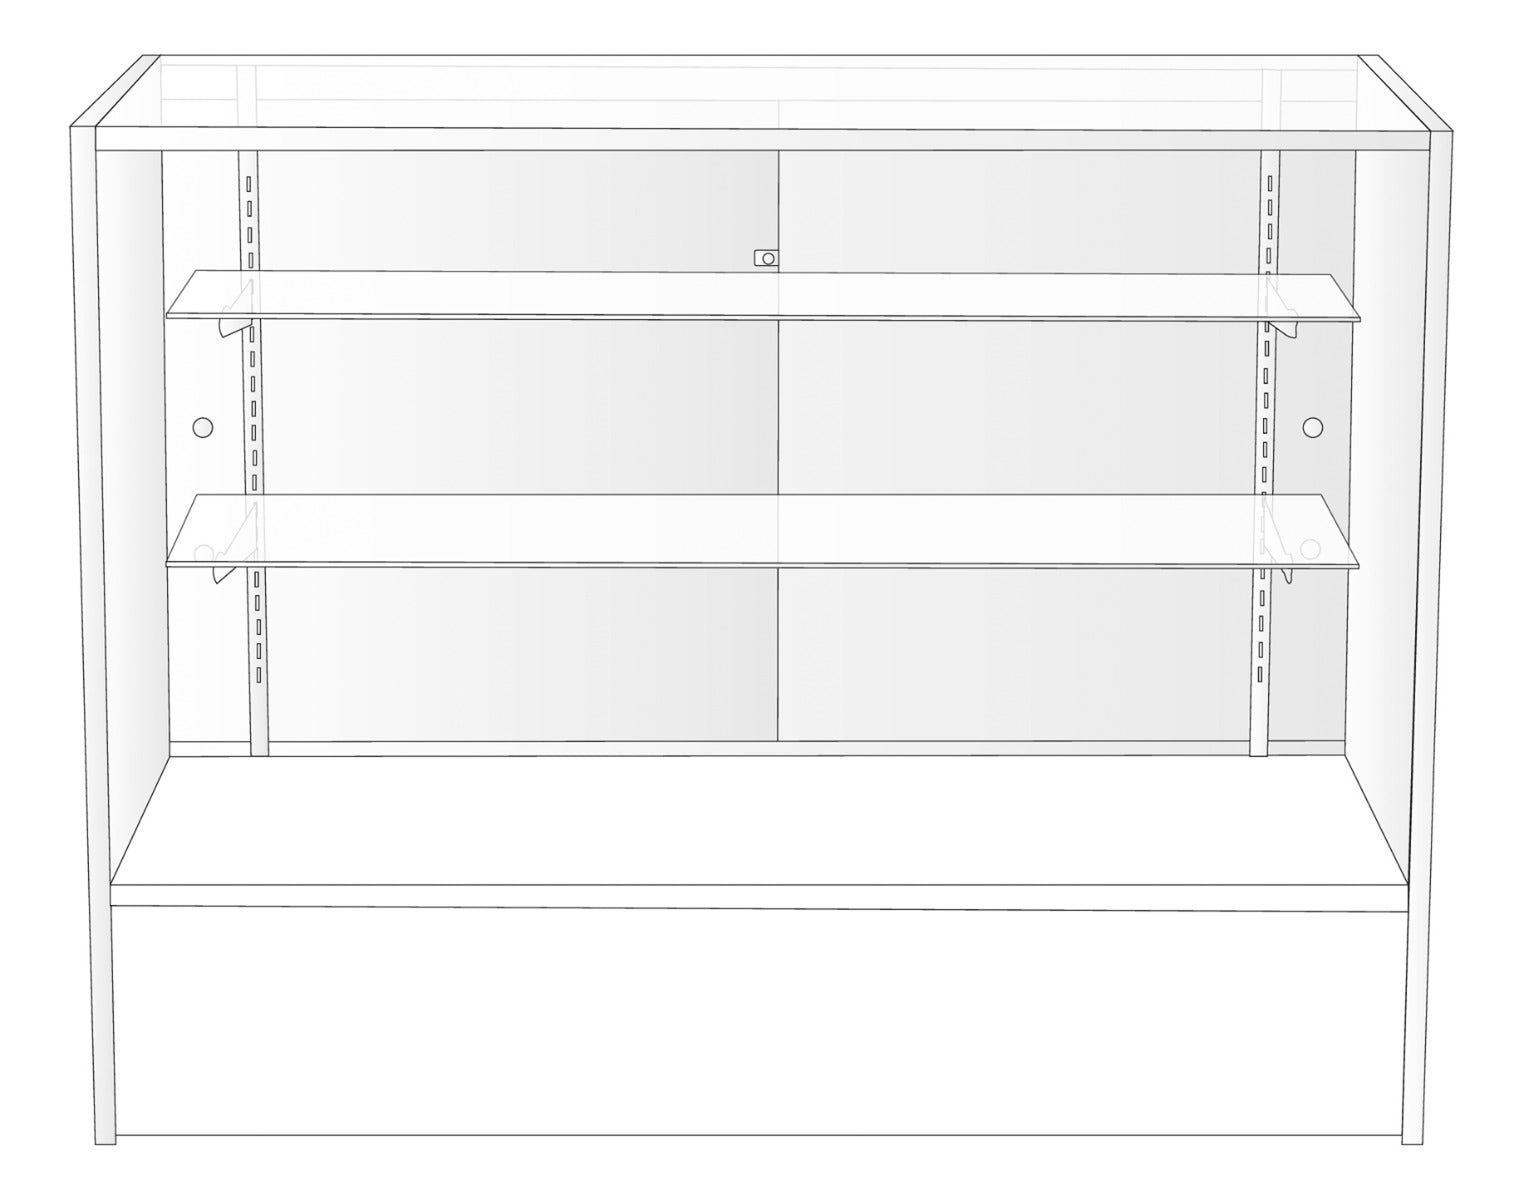 Retail Counter & Glass Display Case Combo | 2 Shelves - Eddie's Hang-Up Display Ltd.